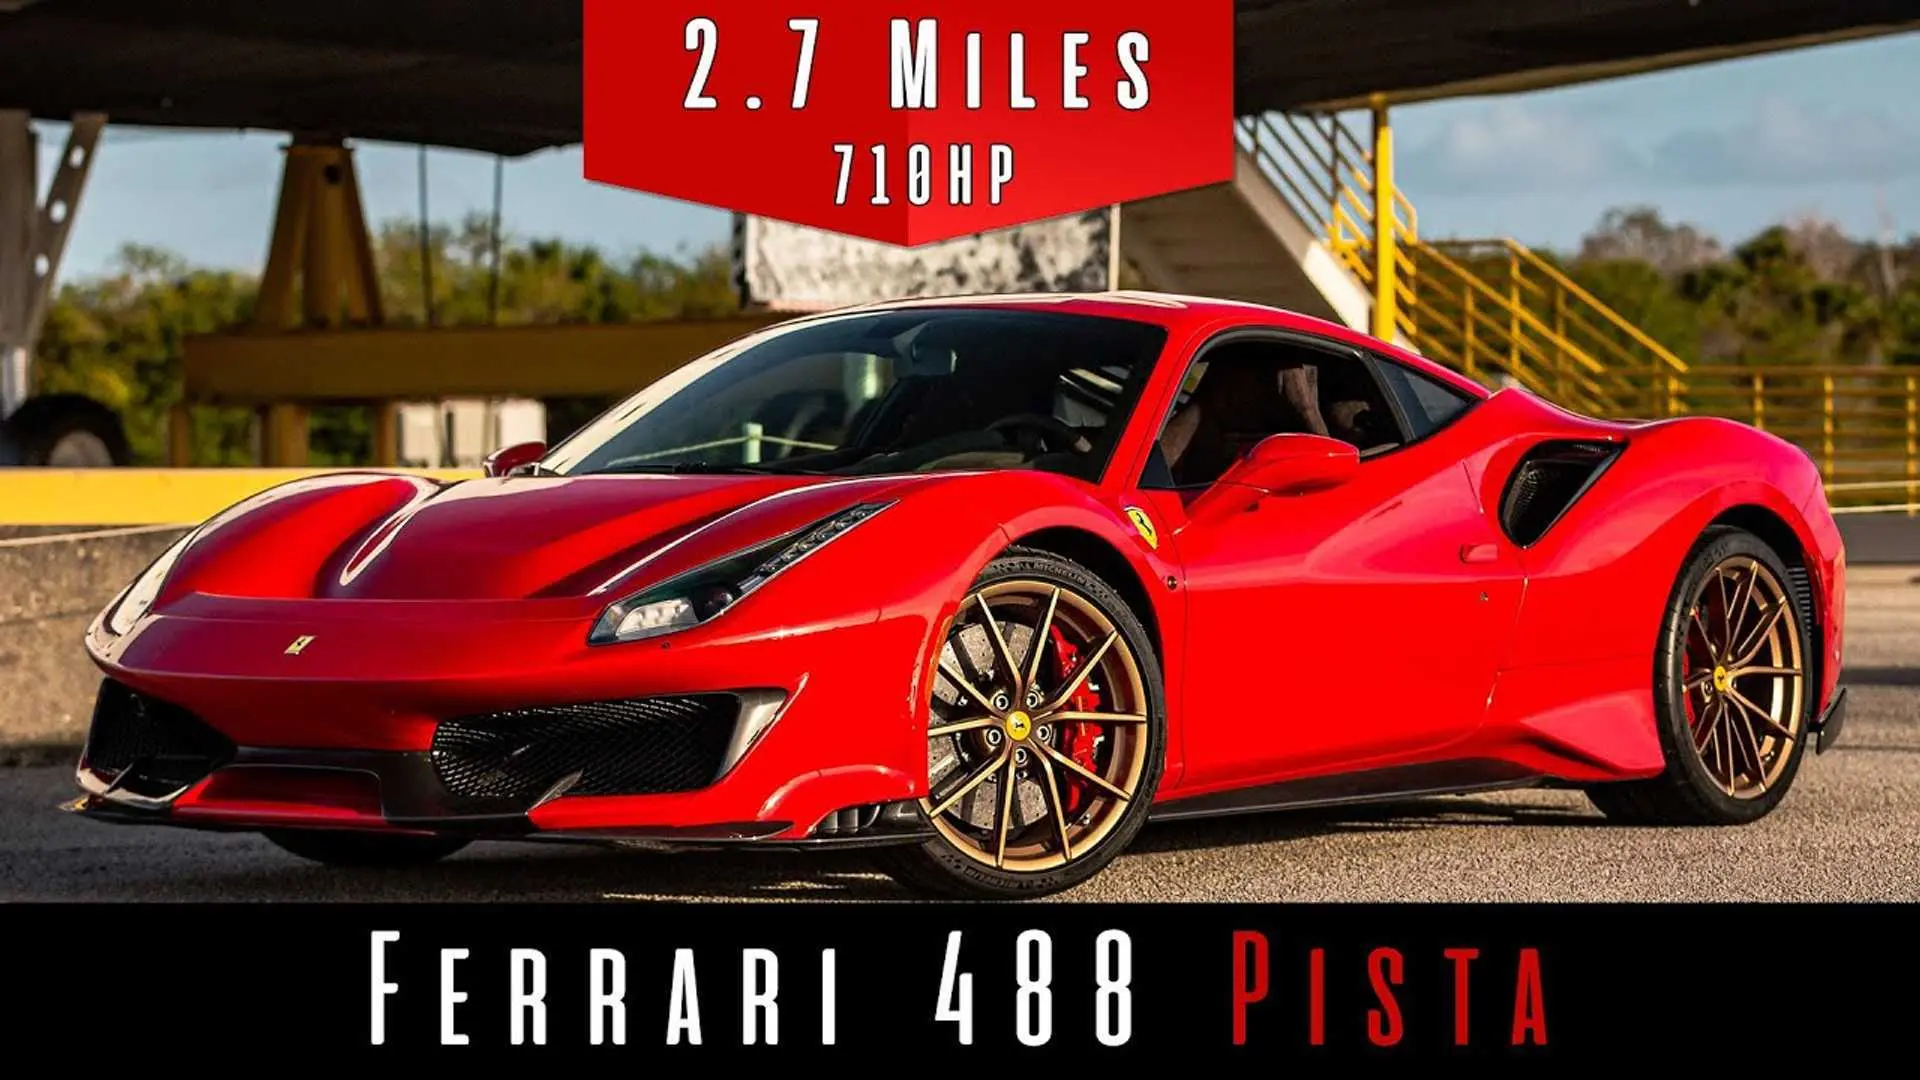 ferrari 488 pista weight - Is the 488 Pista fast